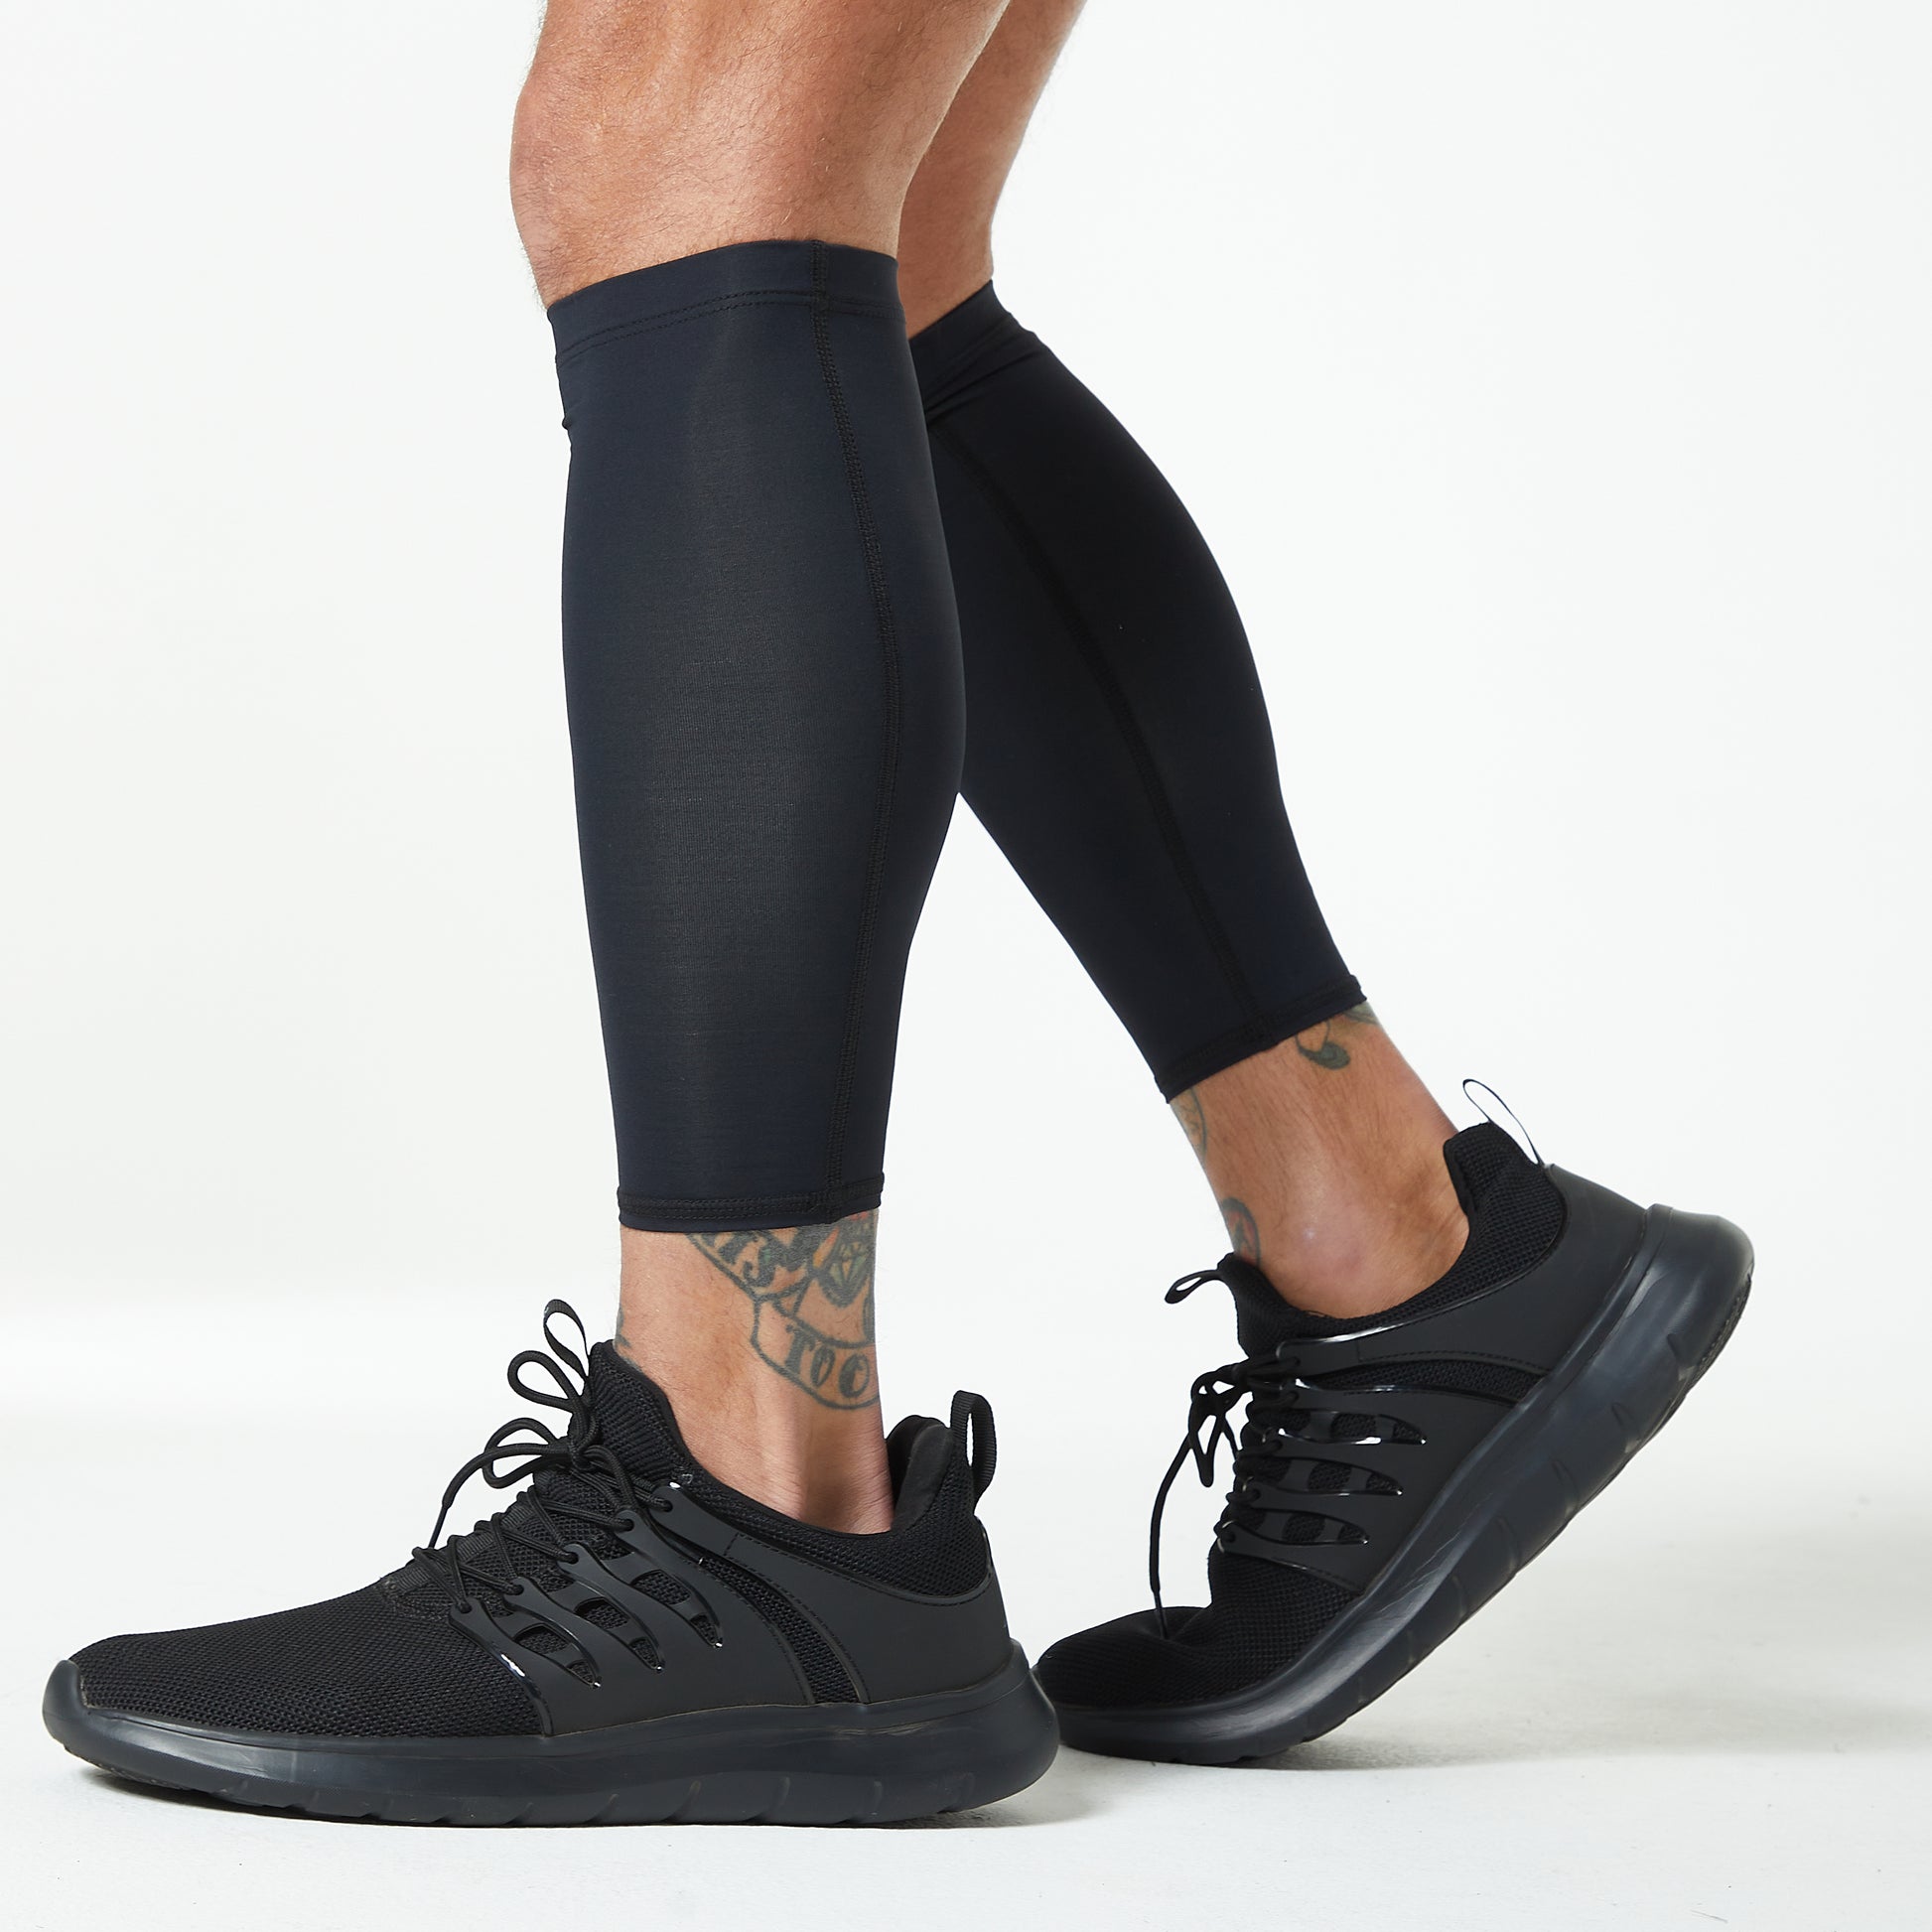 DonJoy® Advantage Performance Compression Knit Leg Calf Sleeve